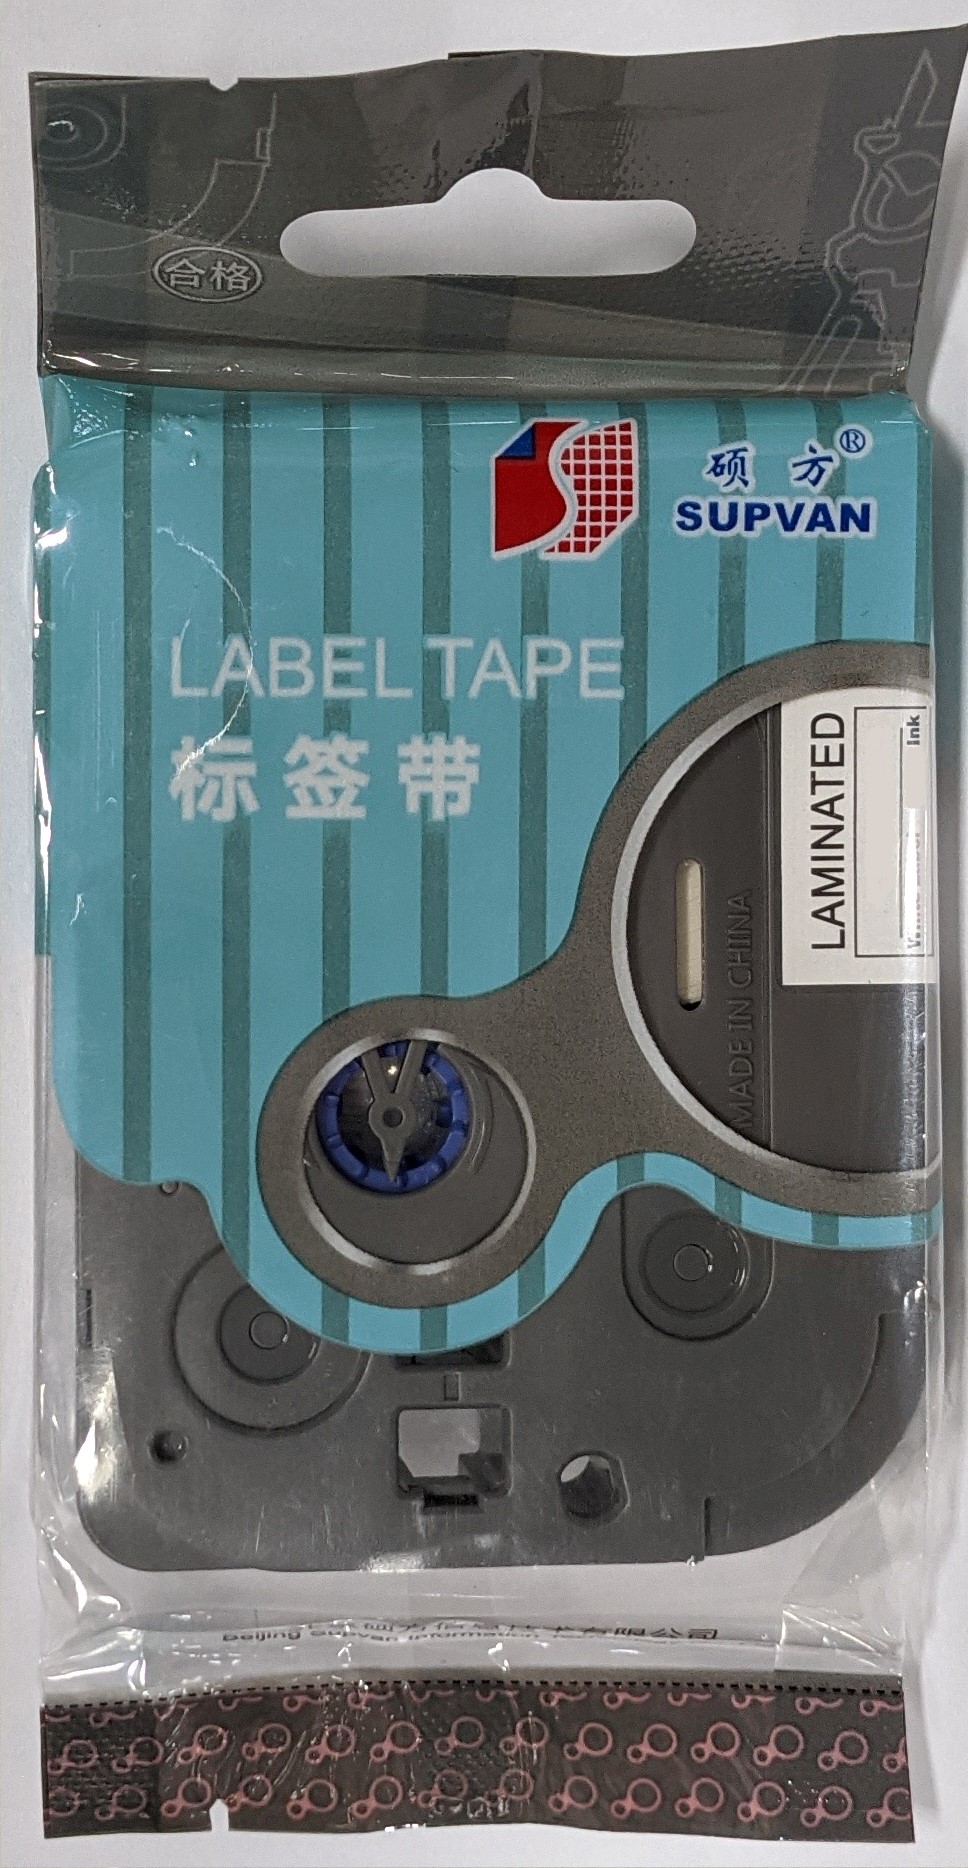 Samolepicí páska Supvan L-325E, 9mm x 8m, biela tlač / čierný podklad, laminovaná